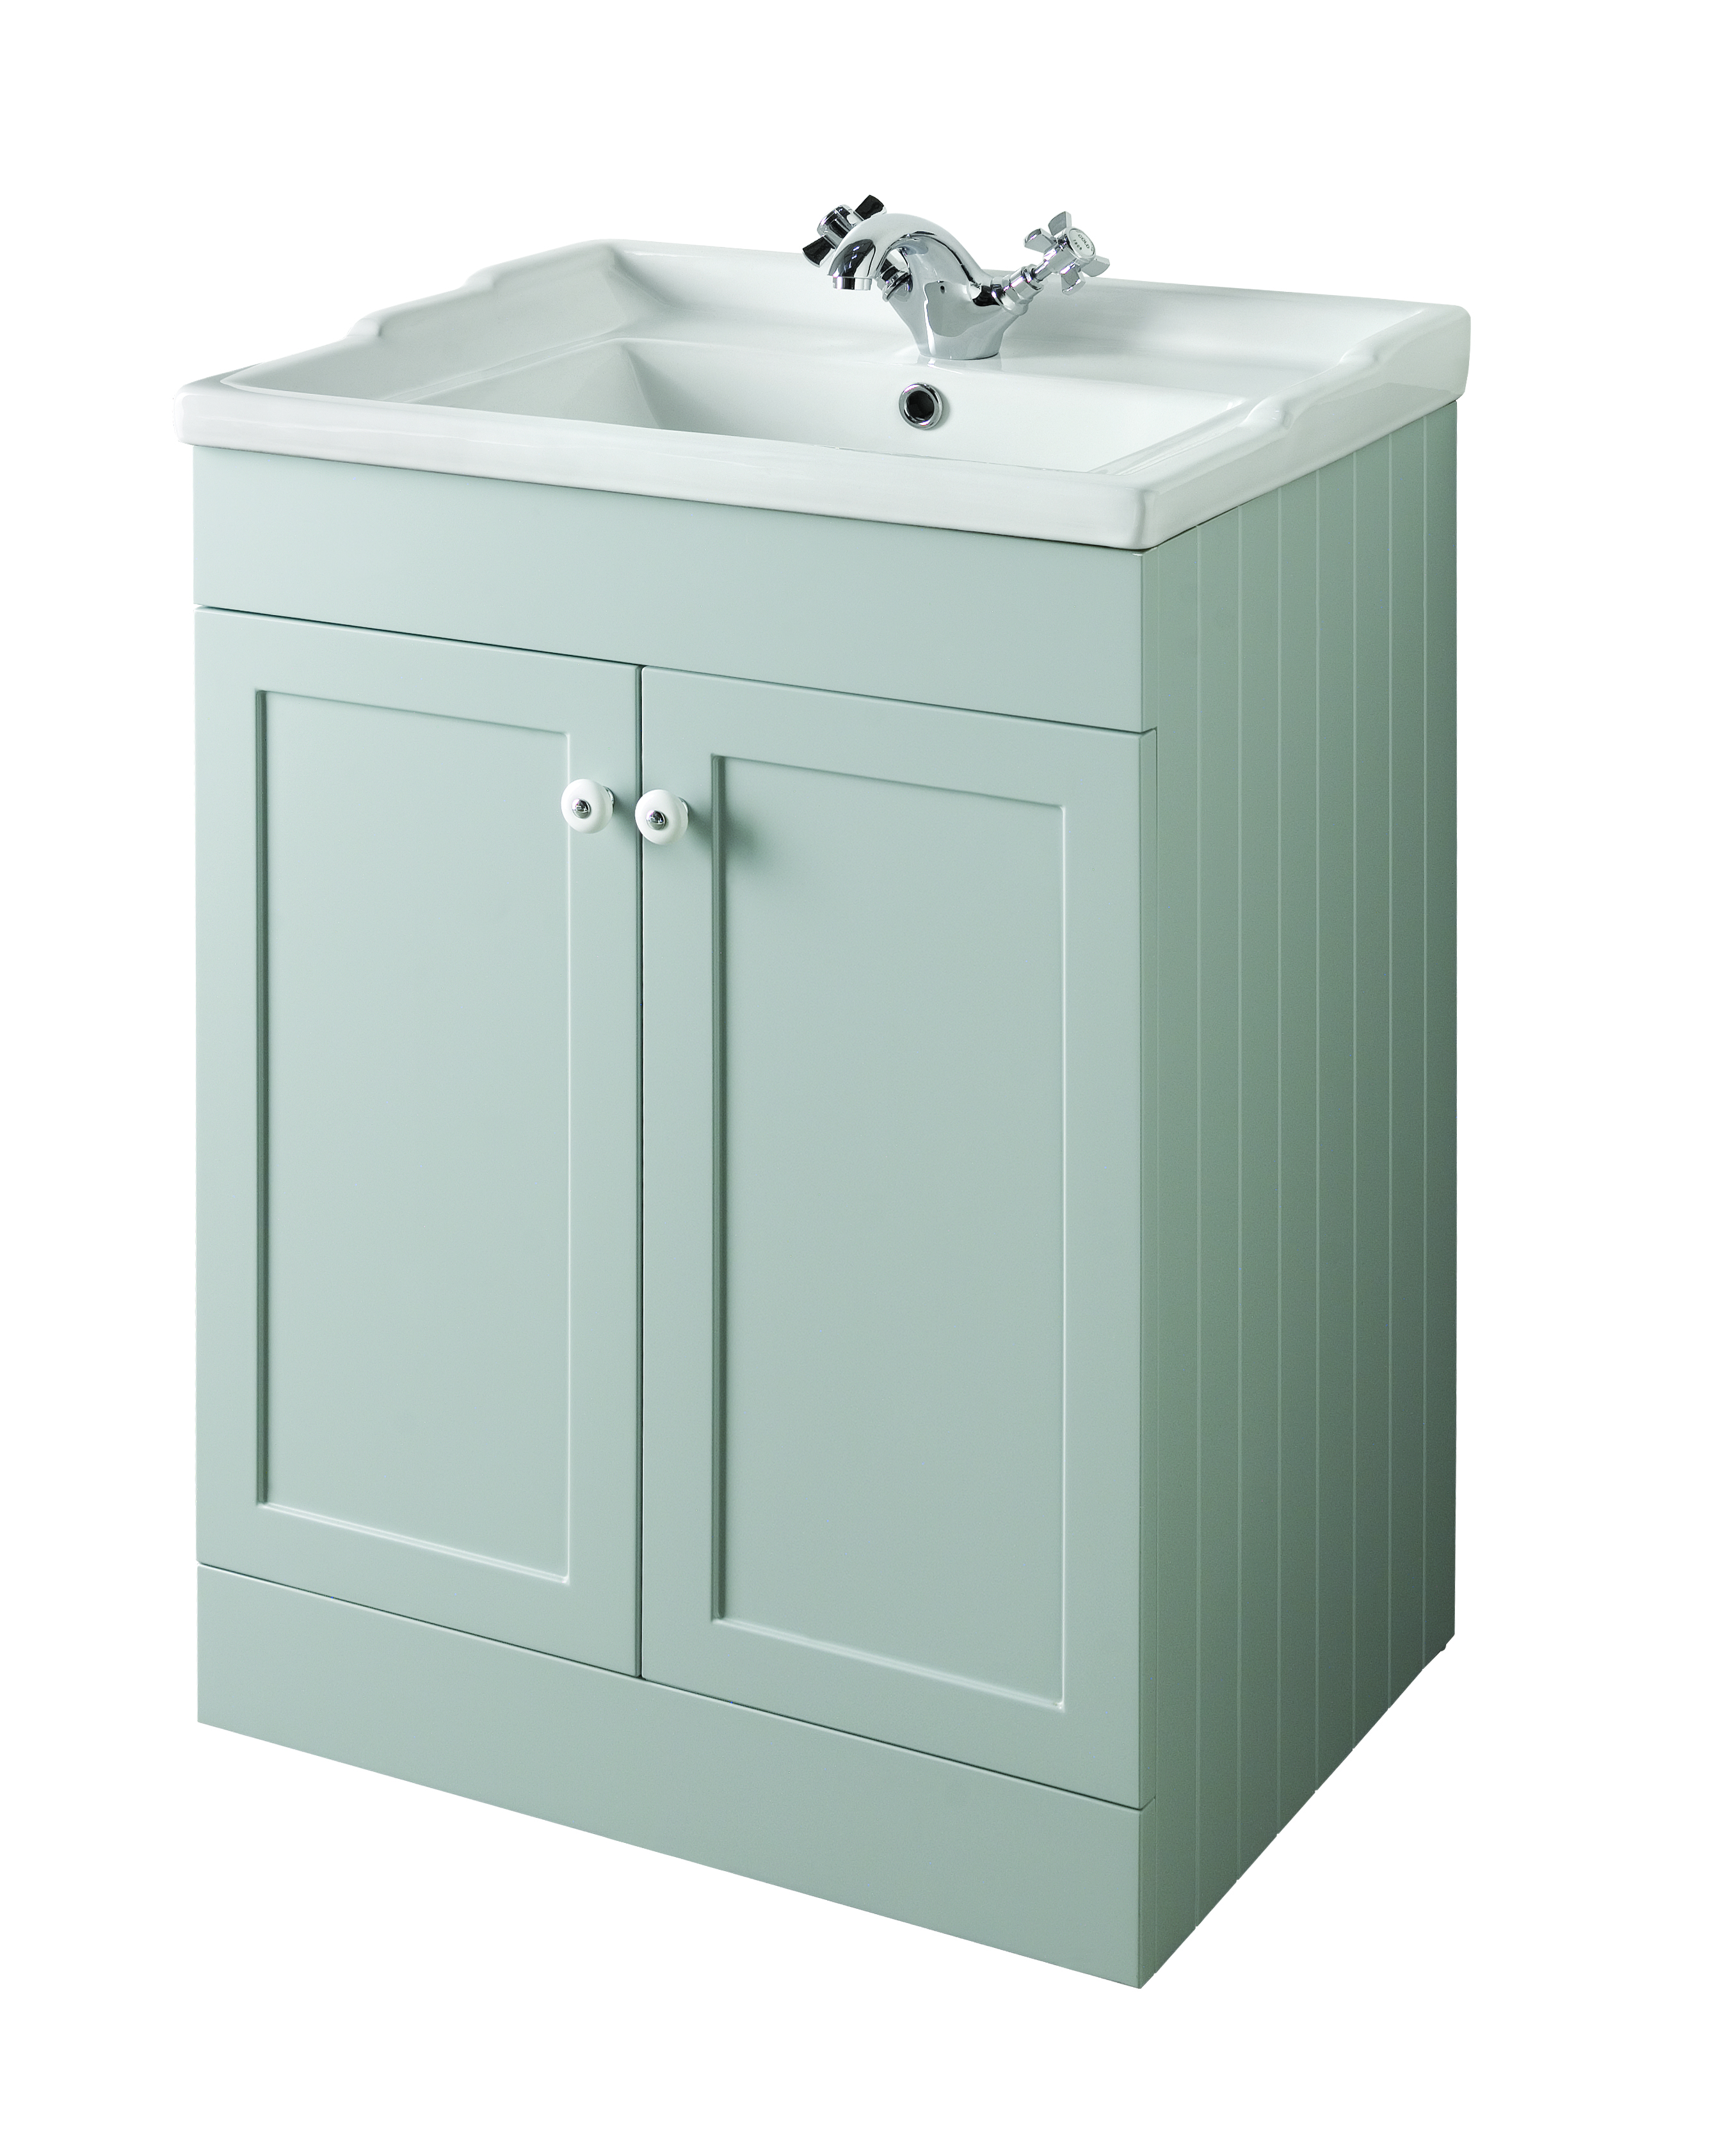 Bathroom Furniture, 600mm Unit - Matt Dove Grey, STRABANE WHOLESALE LTD, Strabane, Co. Tyrone